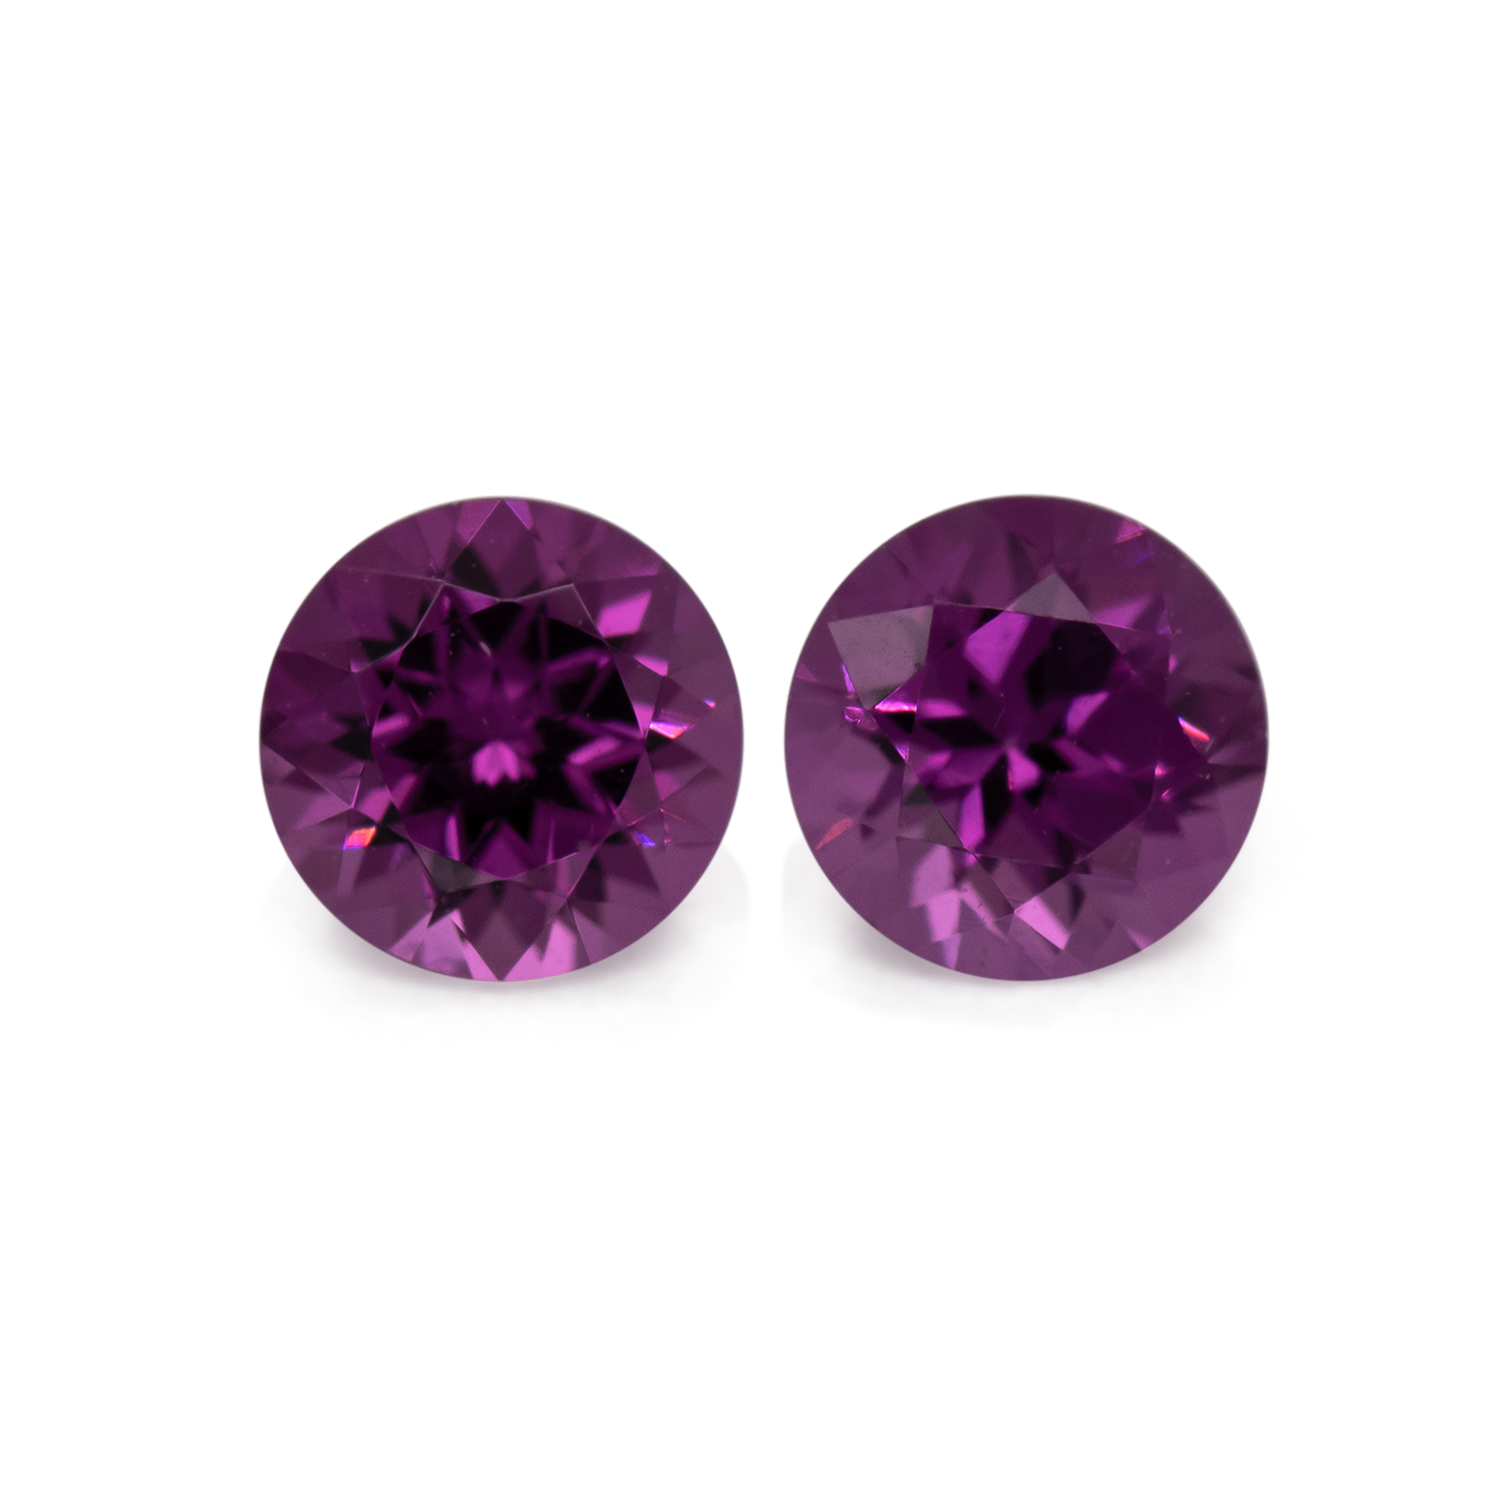 Royal Purple Garnet Pair - purple, round, 4x4 mm, 0.63 - 0.66 cts, No. RP94001